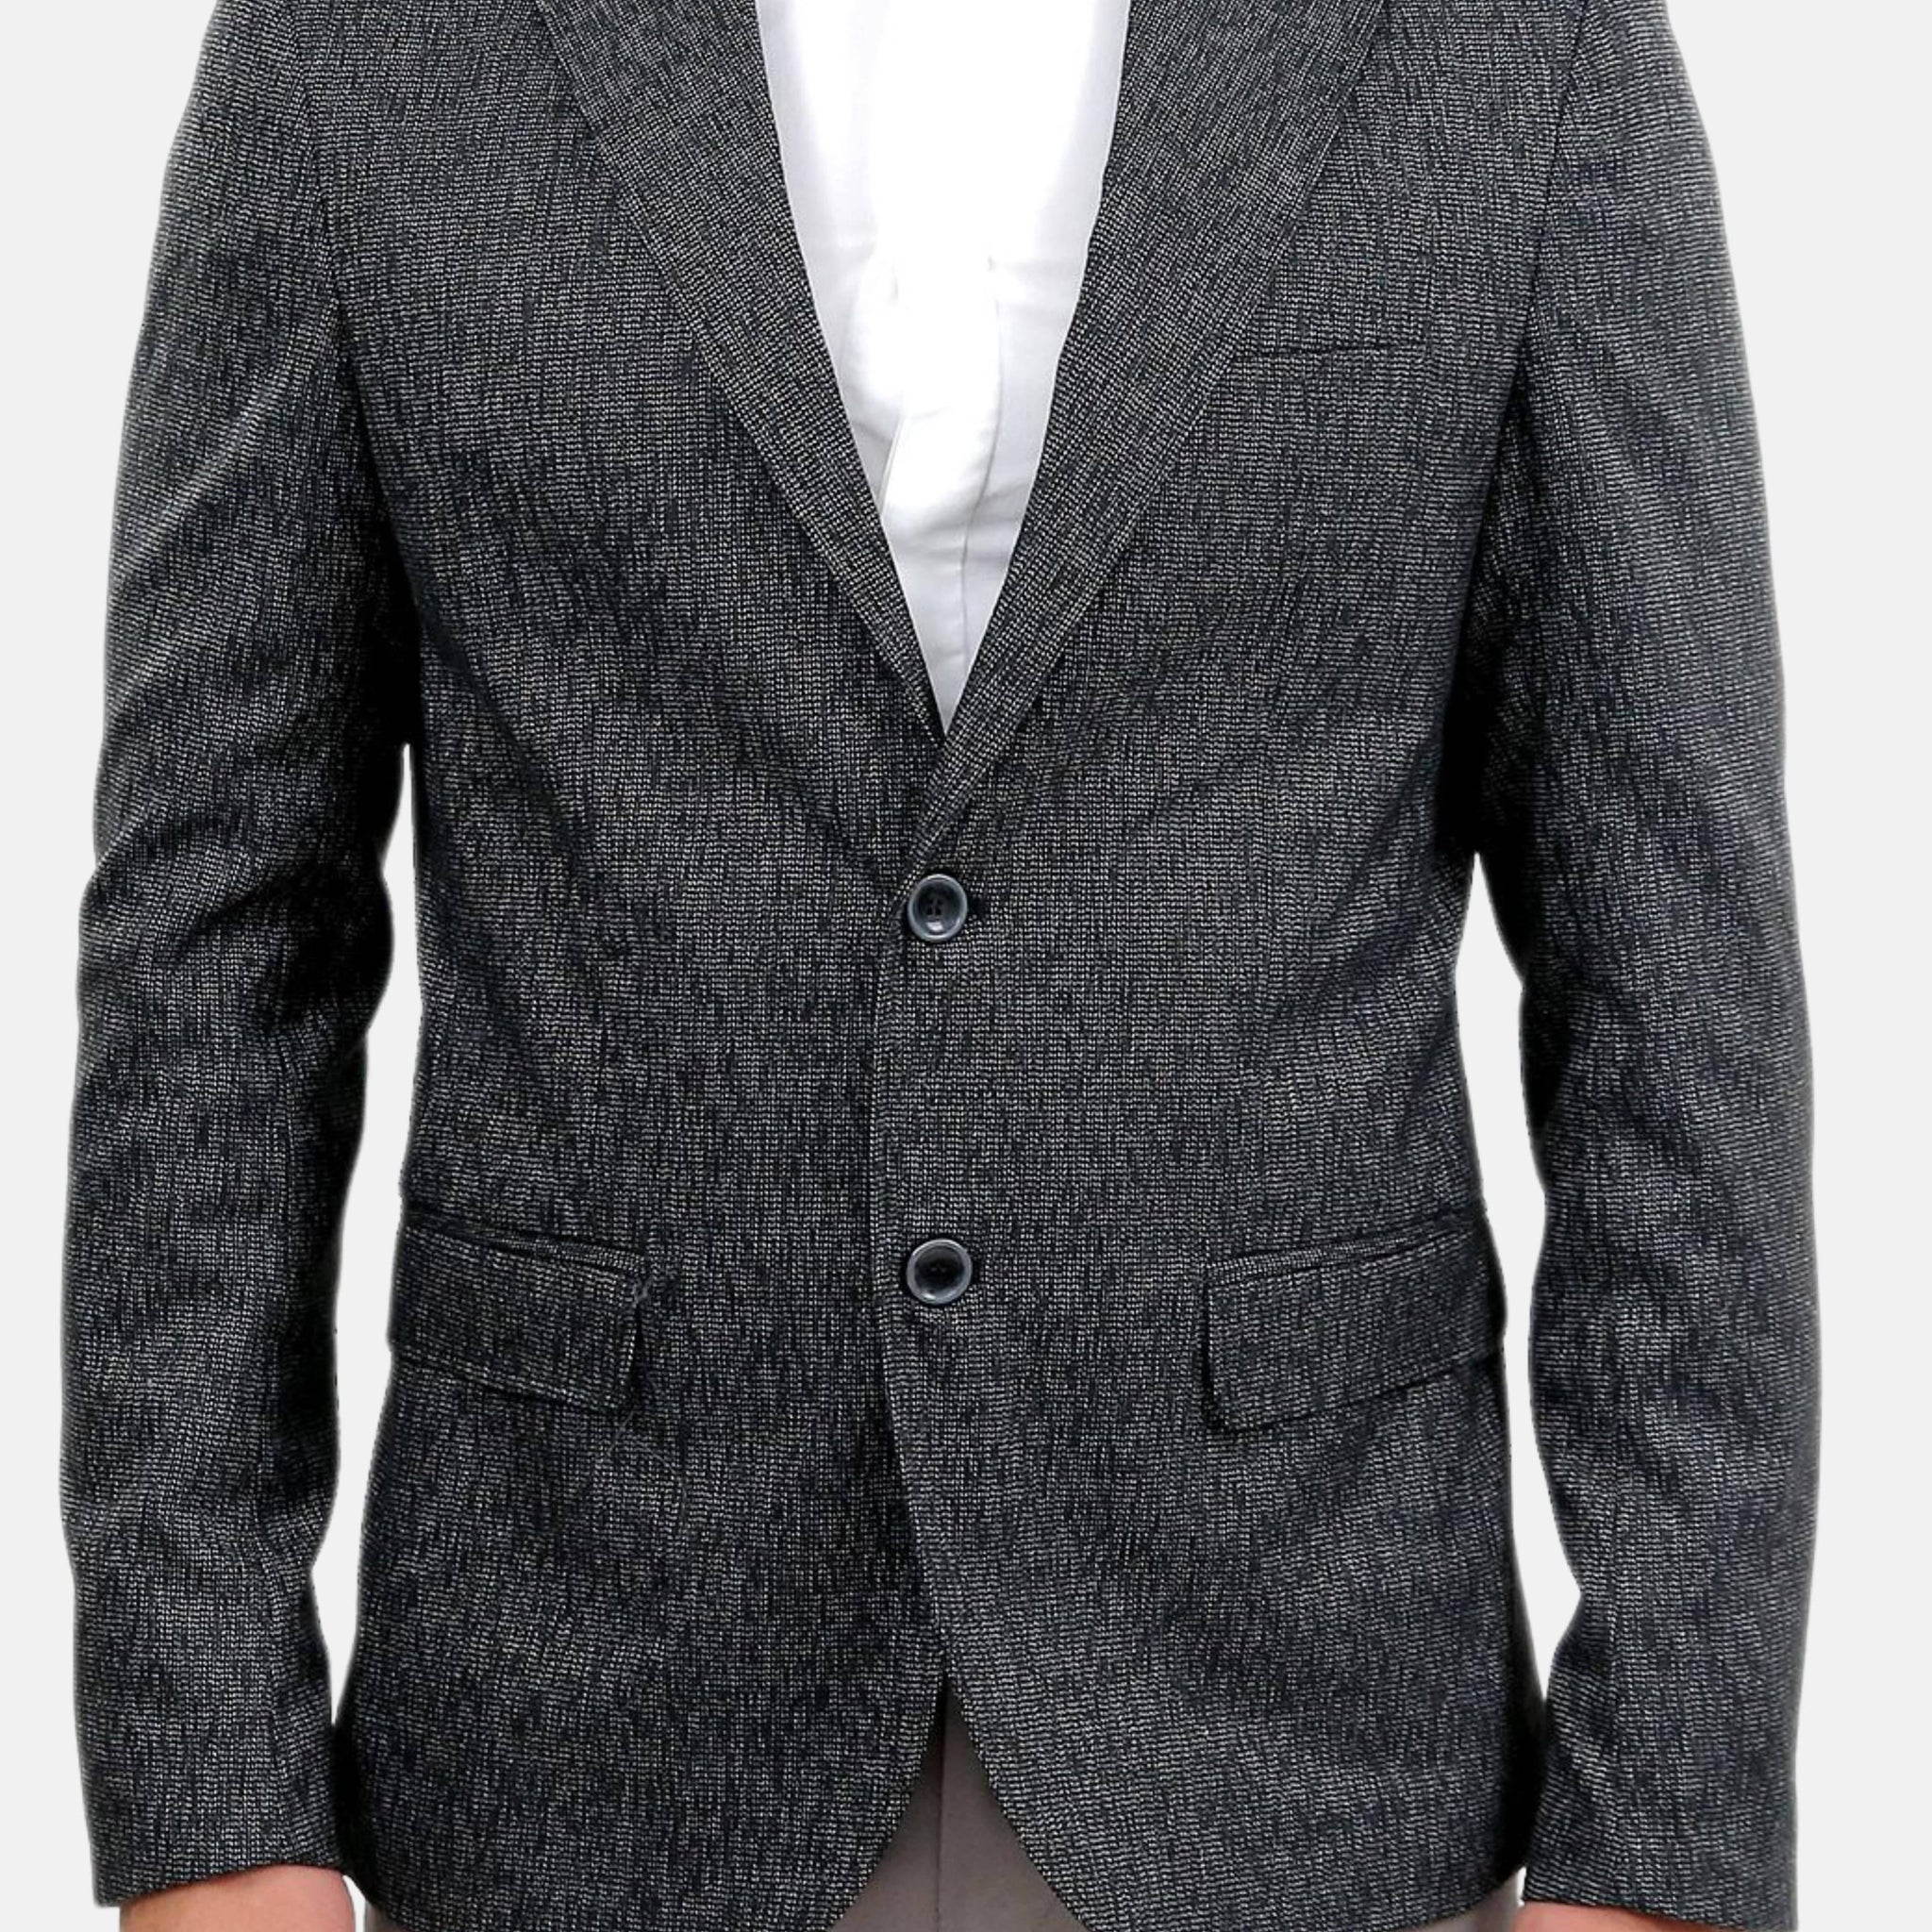 Jasp?® gray wool jacket